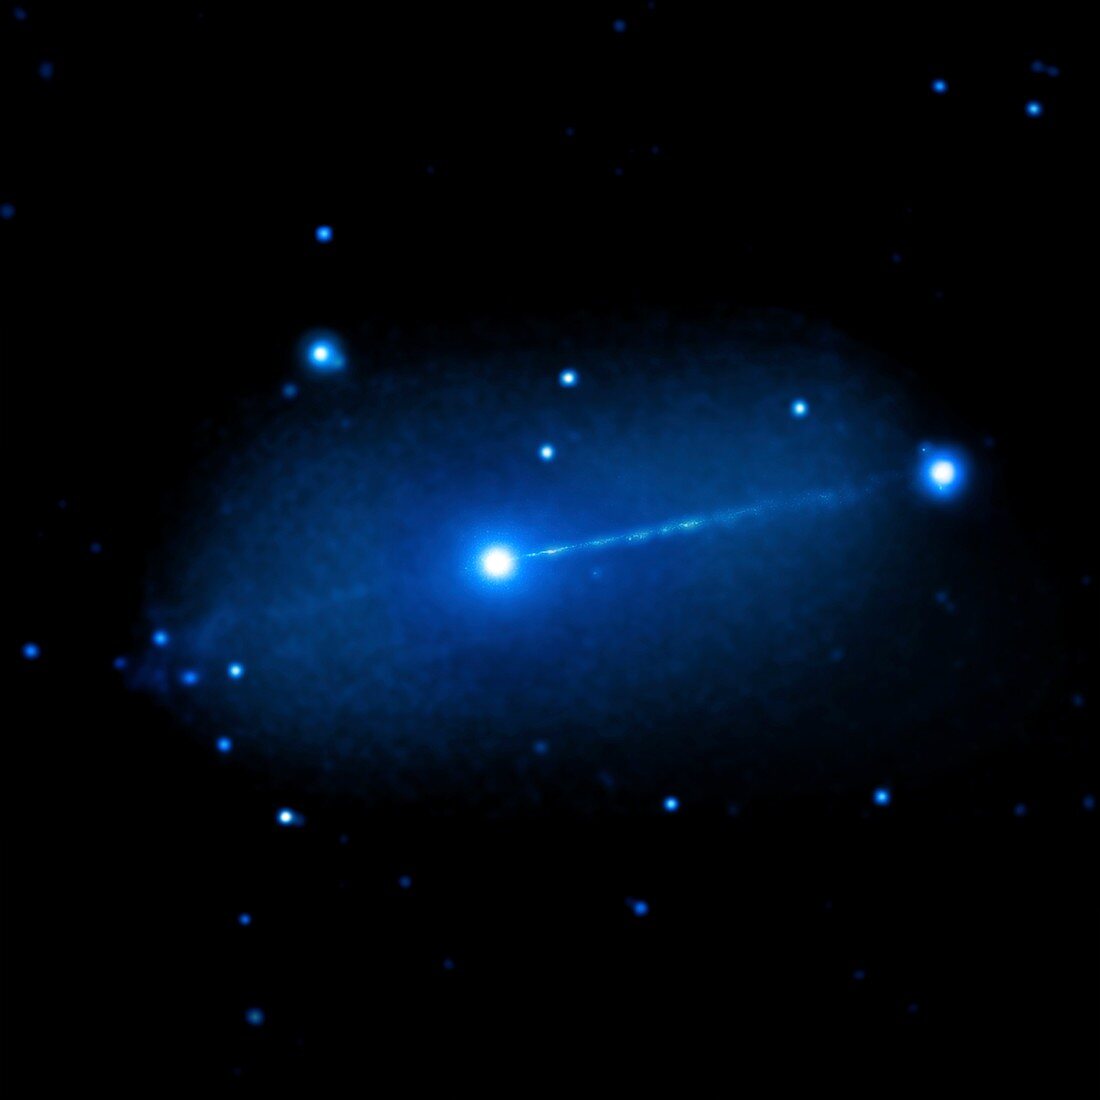 Pictor A galaxy, Chandra X-ray image